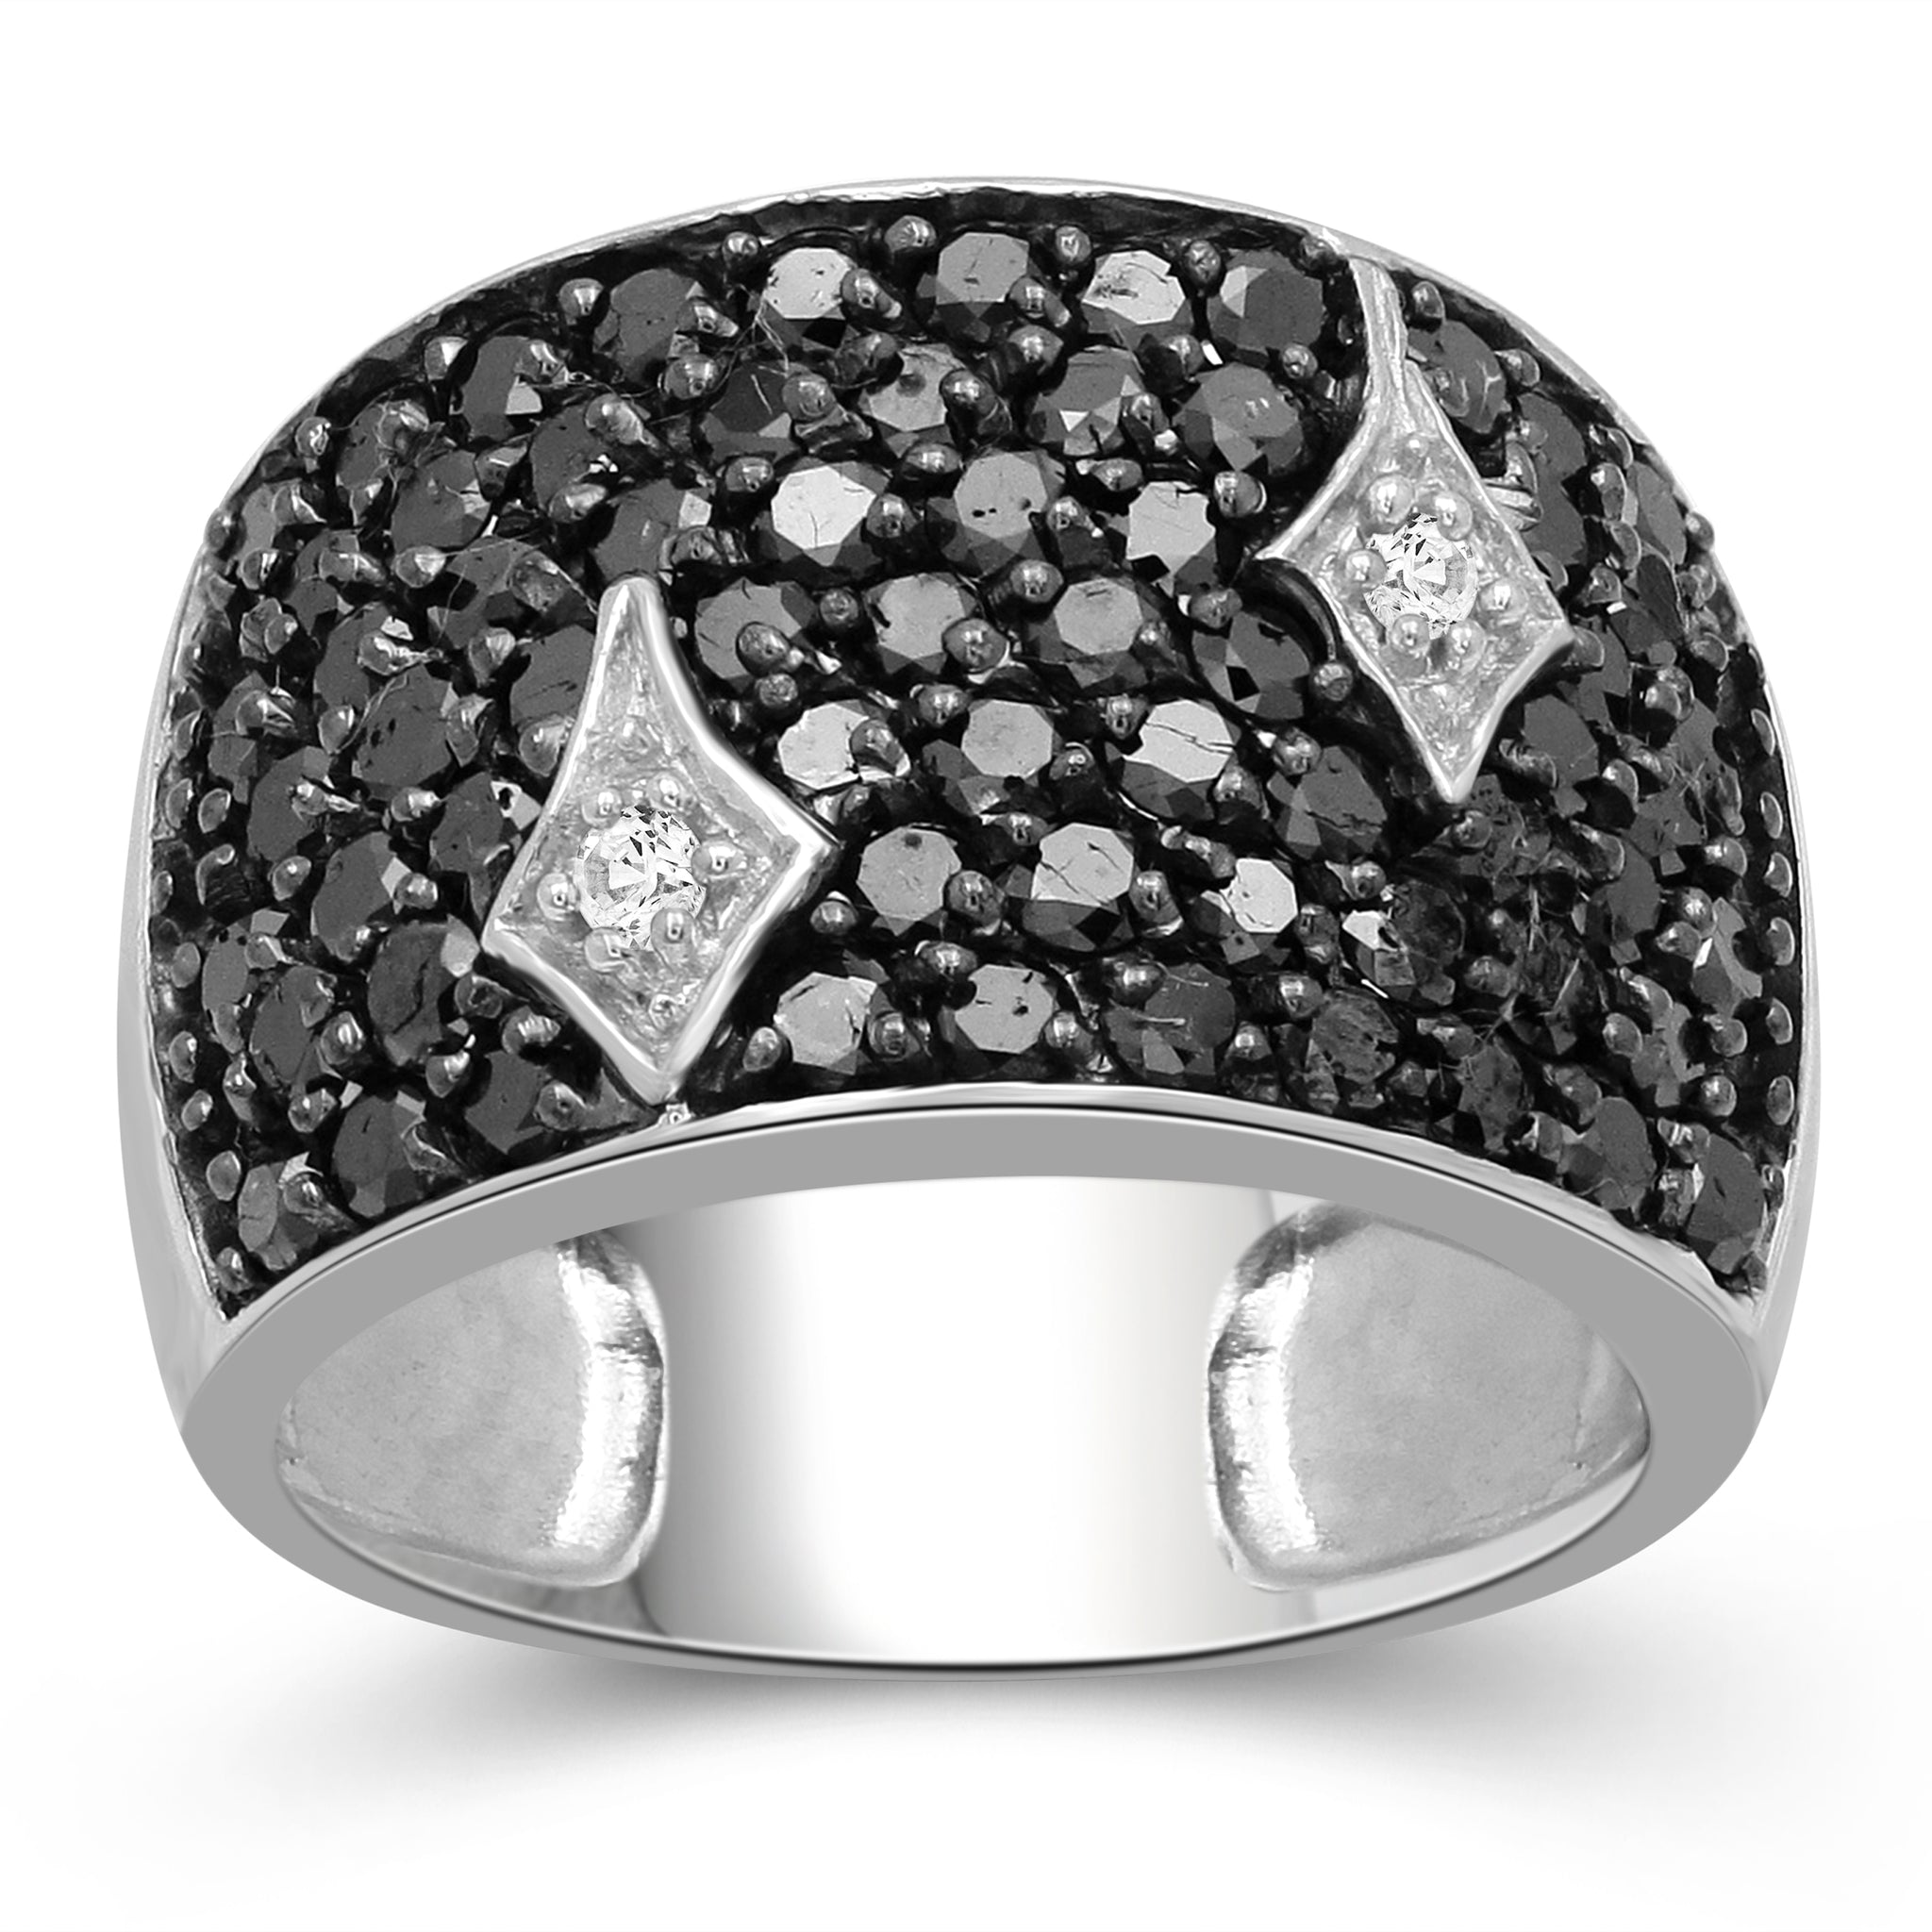 2.00 Carat Black & White Diamond Ring in Sterling Silver